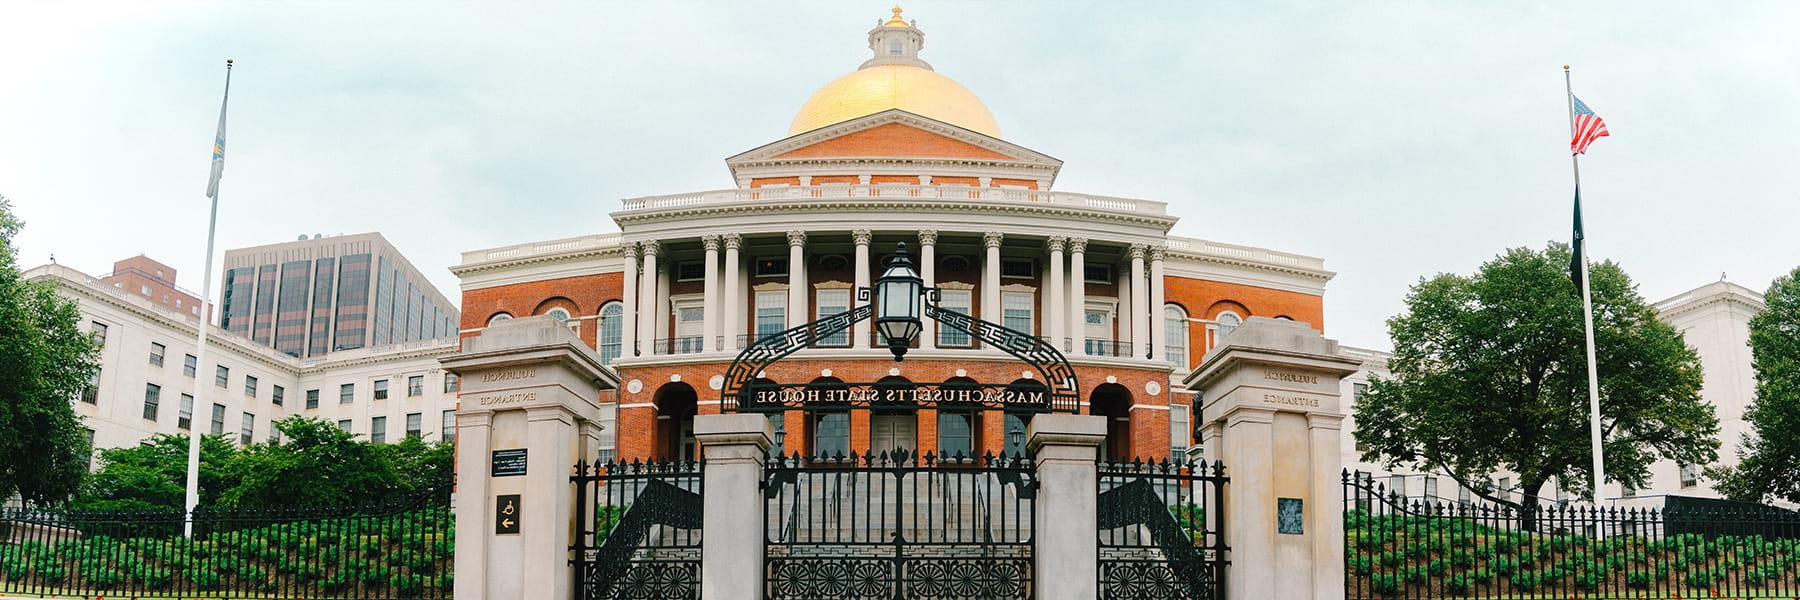 Massachusetts Statehouse in Boston.